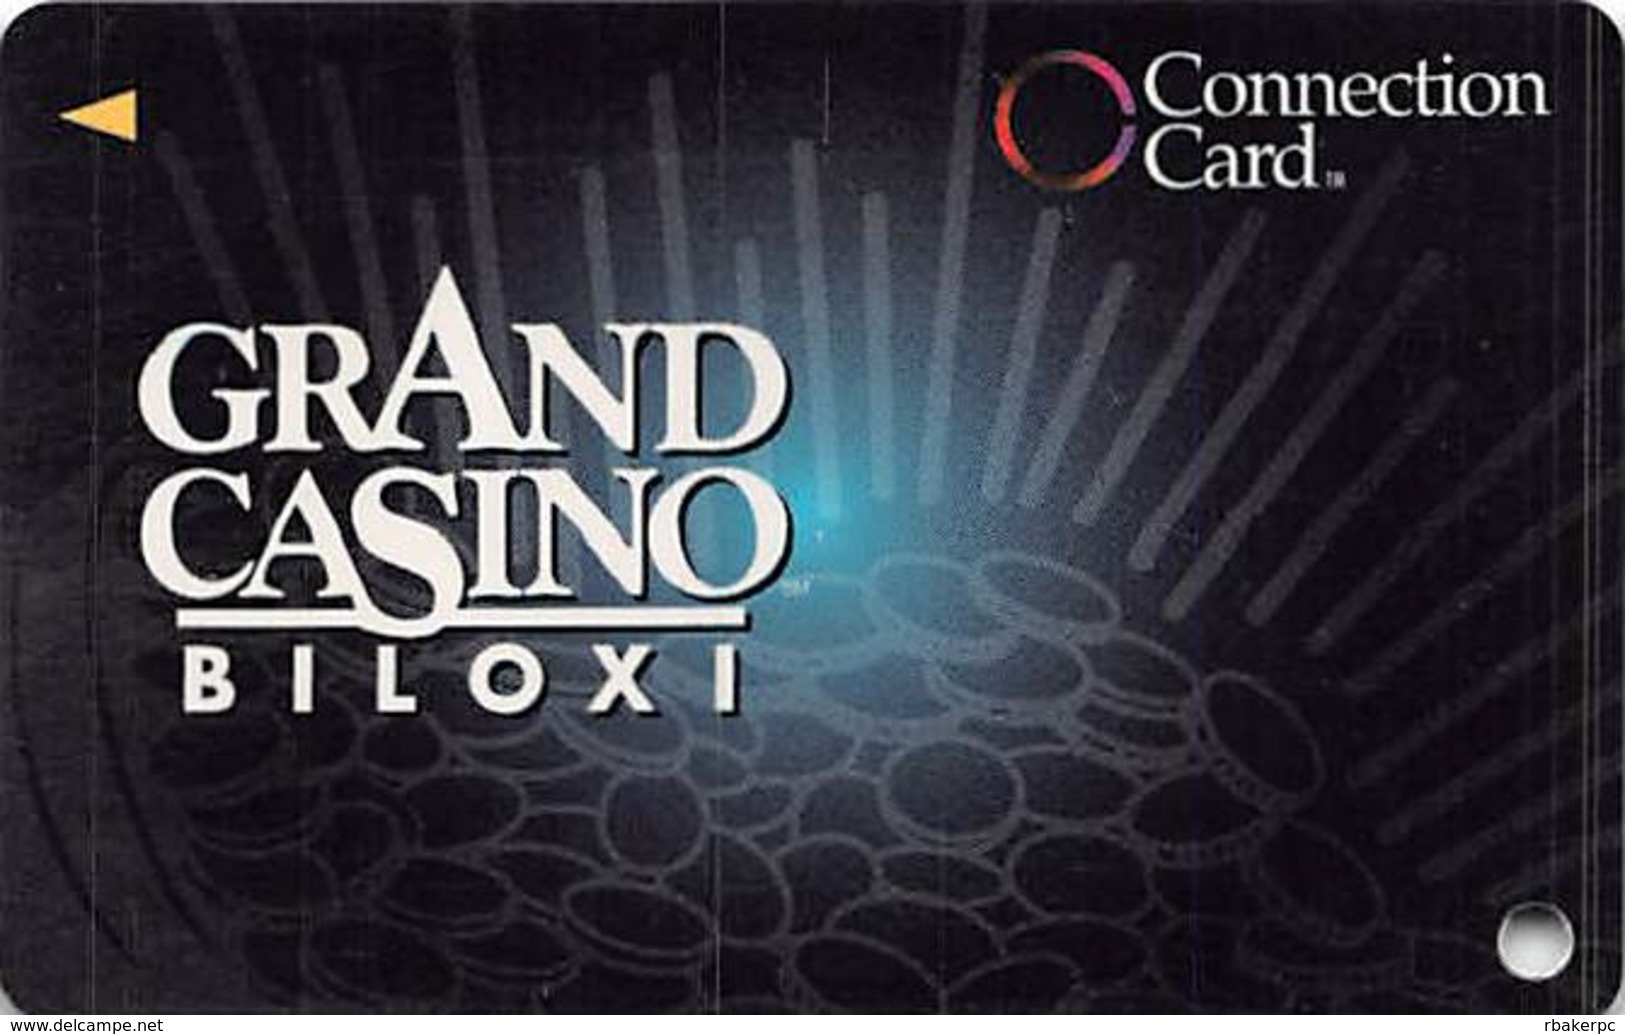 Grand Casino Biloxi MS - BLANK Slot Card - Connection Card With Cpi 2011575 Over Mag Stripe - Casinokarten